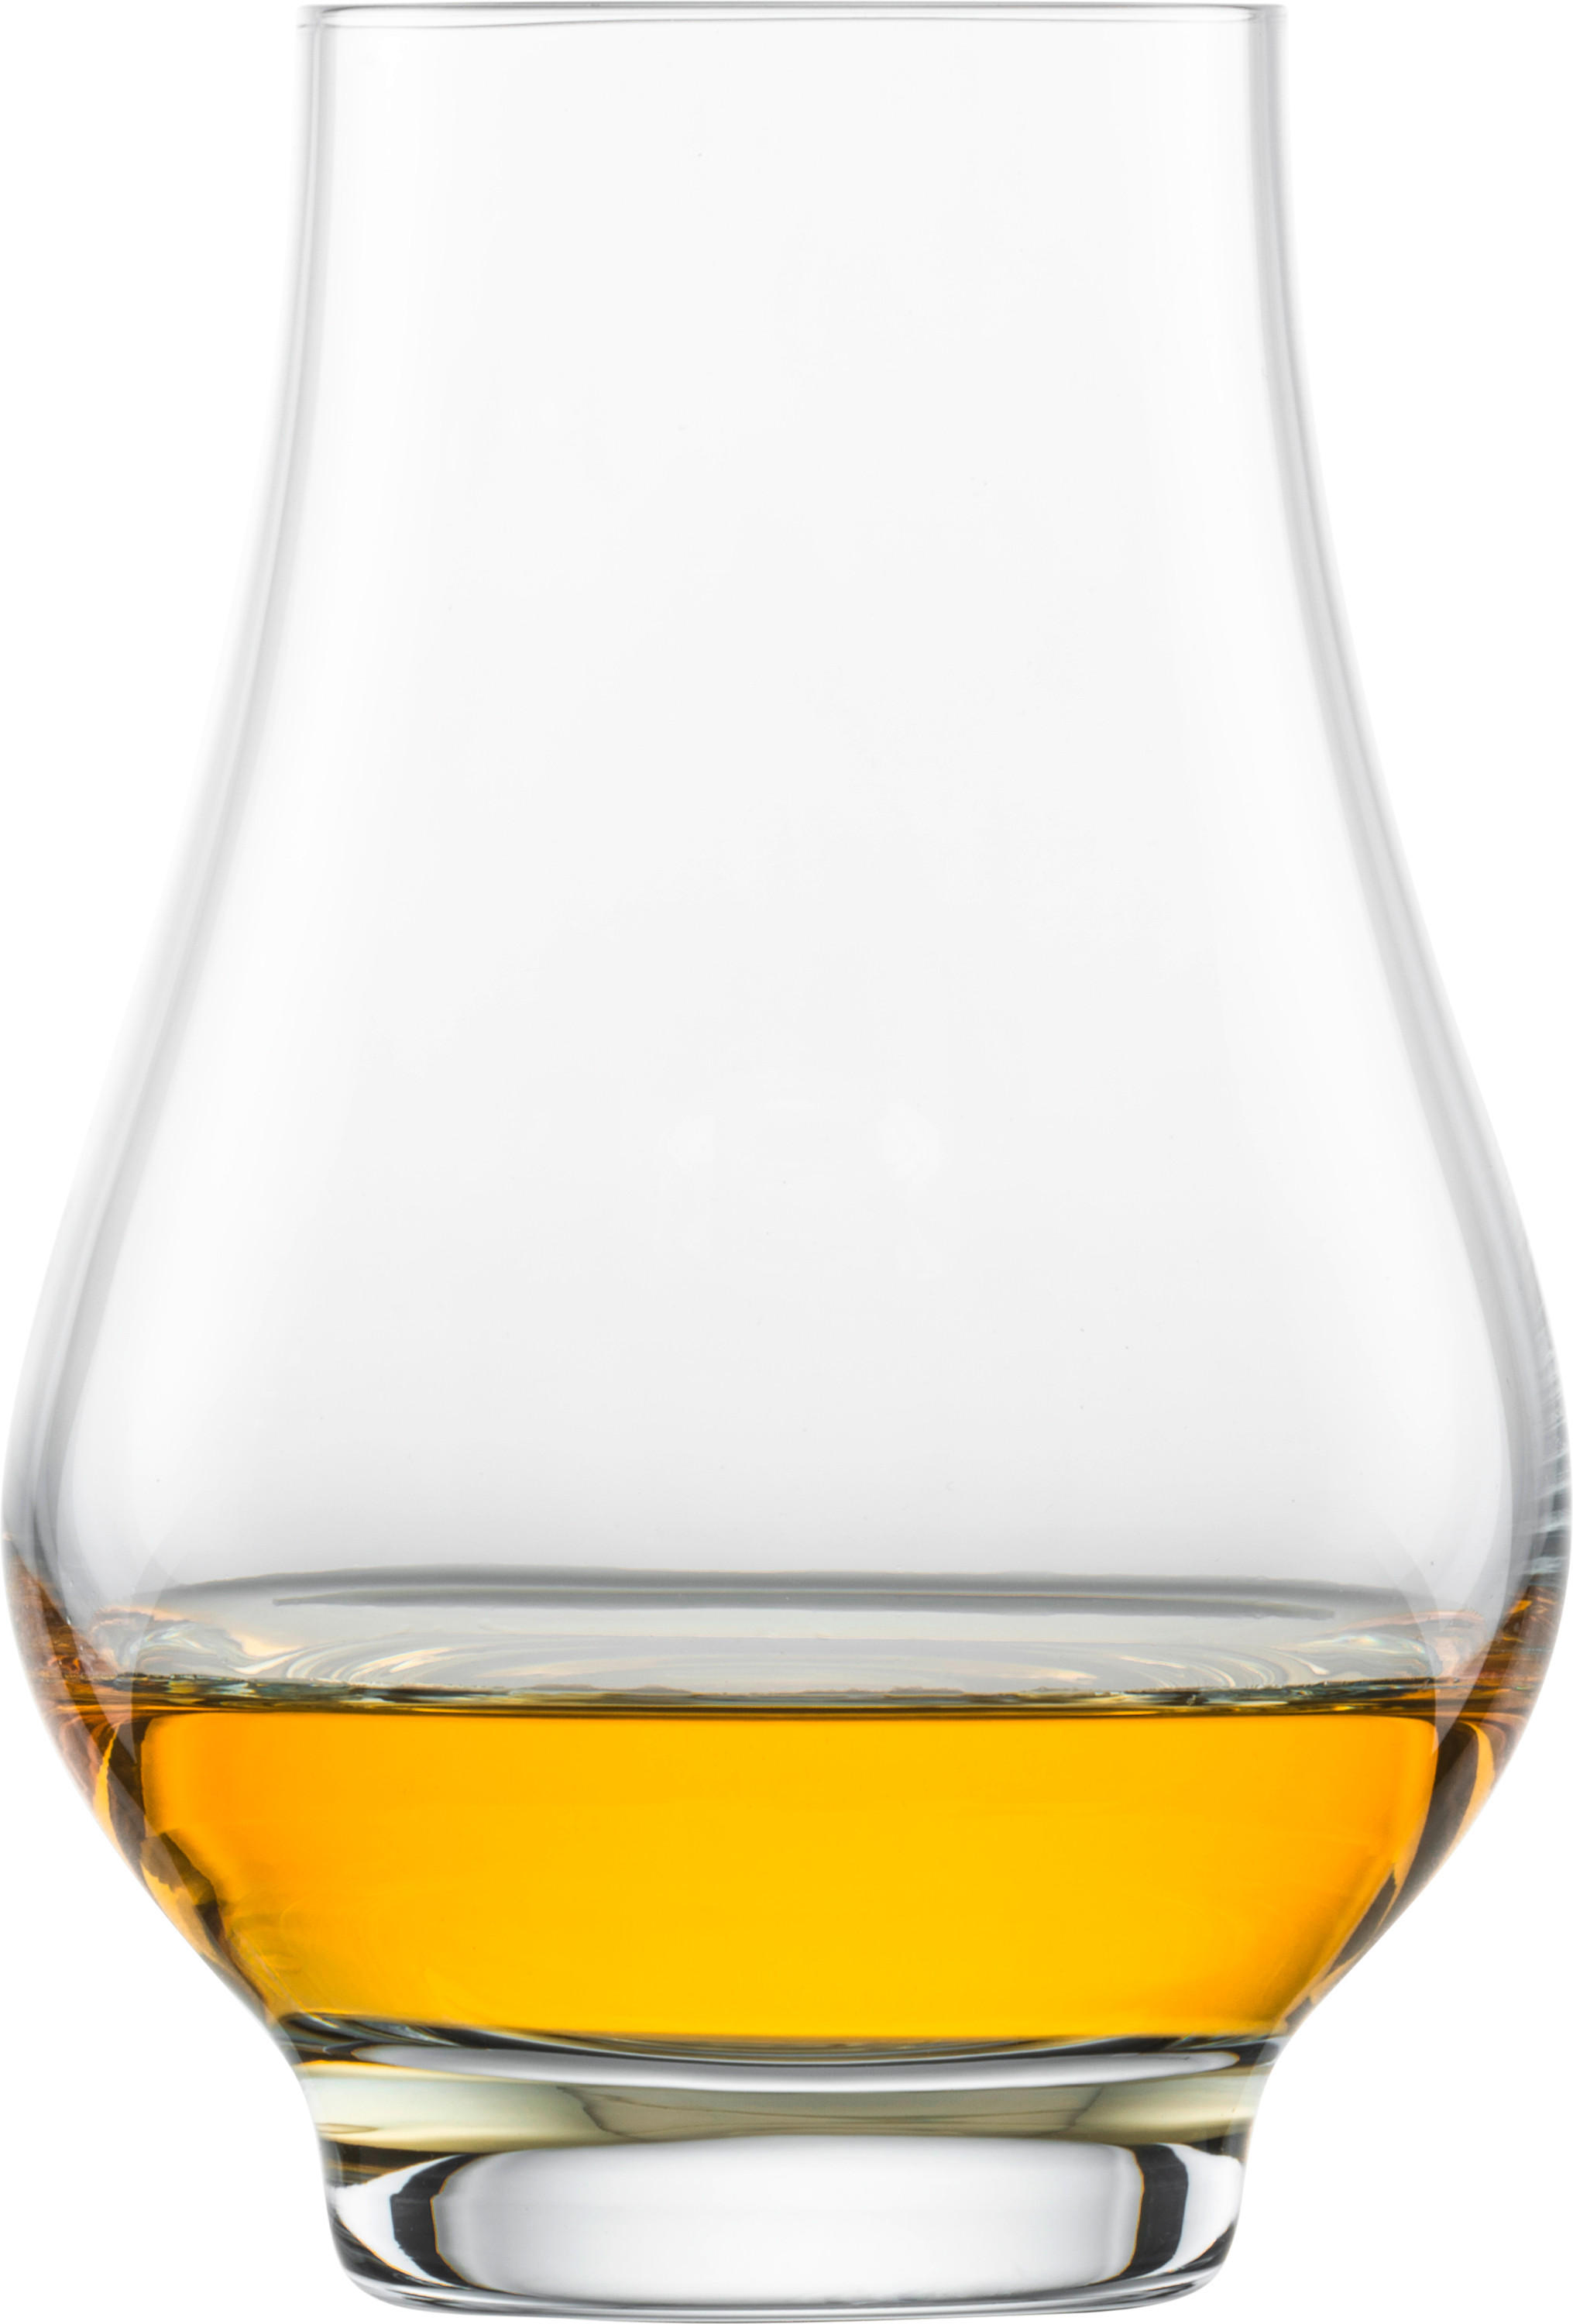 GLÄSERSET Bar Special Whisky Noising 4-teilig  - Klar, KONVENTIONELL, Glas (8,3/12,0cm) - Schott Zwiesel